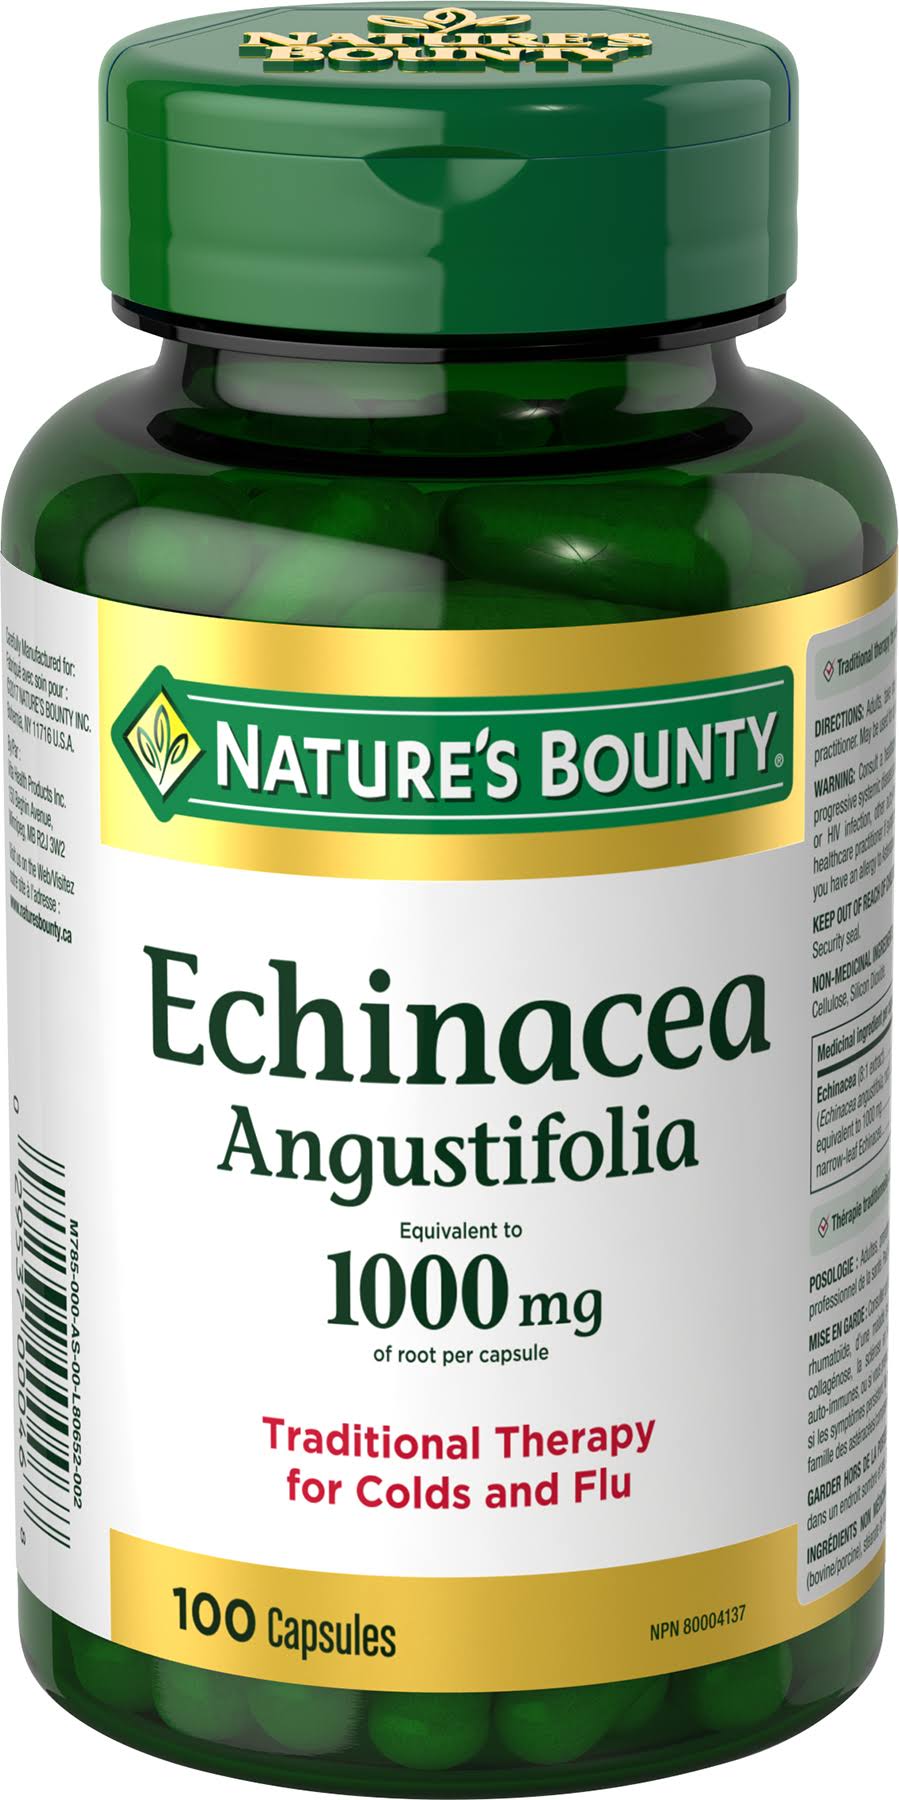 Nature's Bounty Echinacea 1000 mg, 100 Capsules (Packaging May Vary)